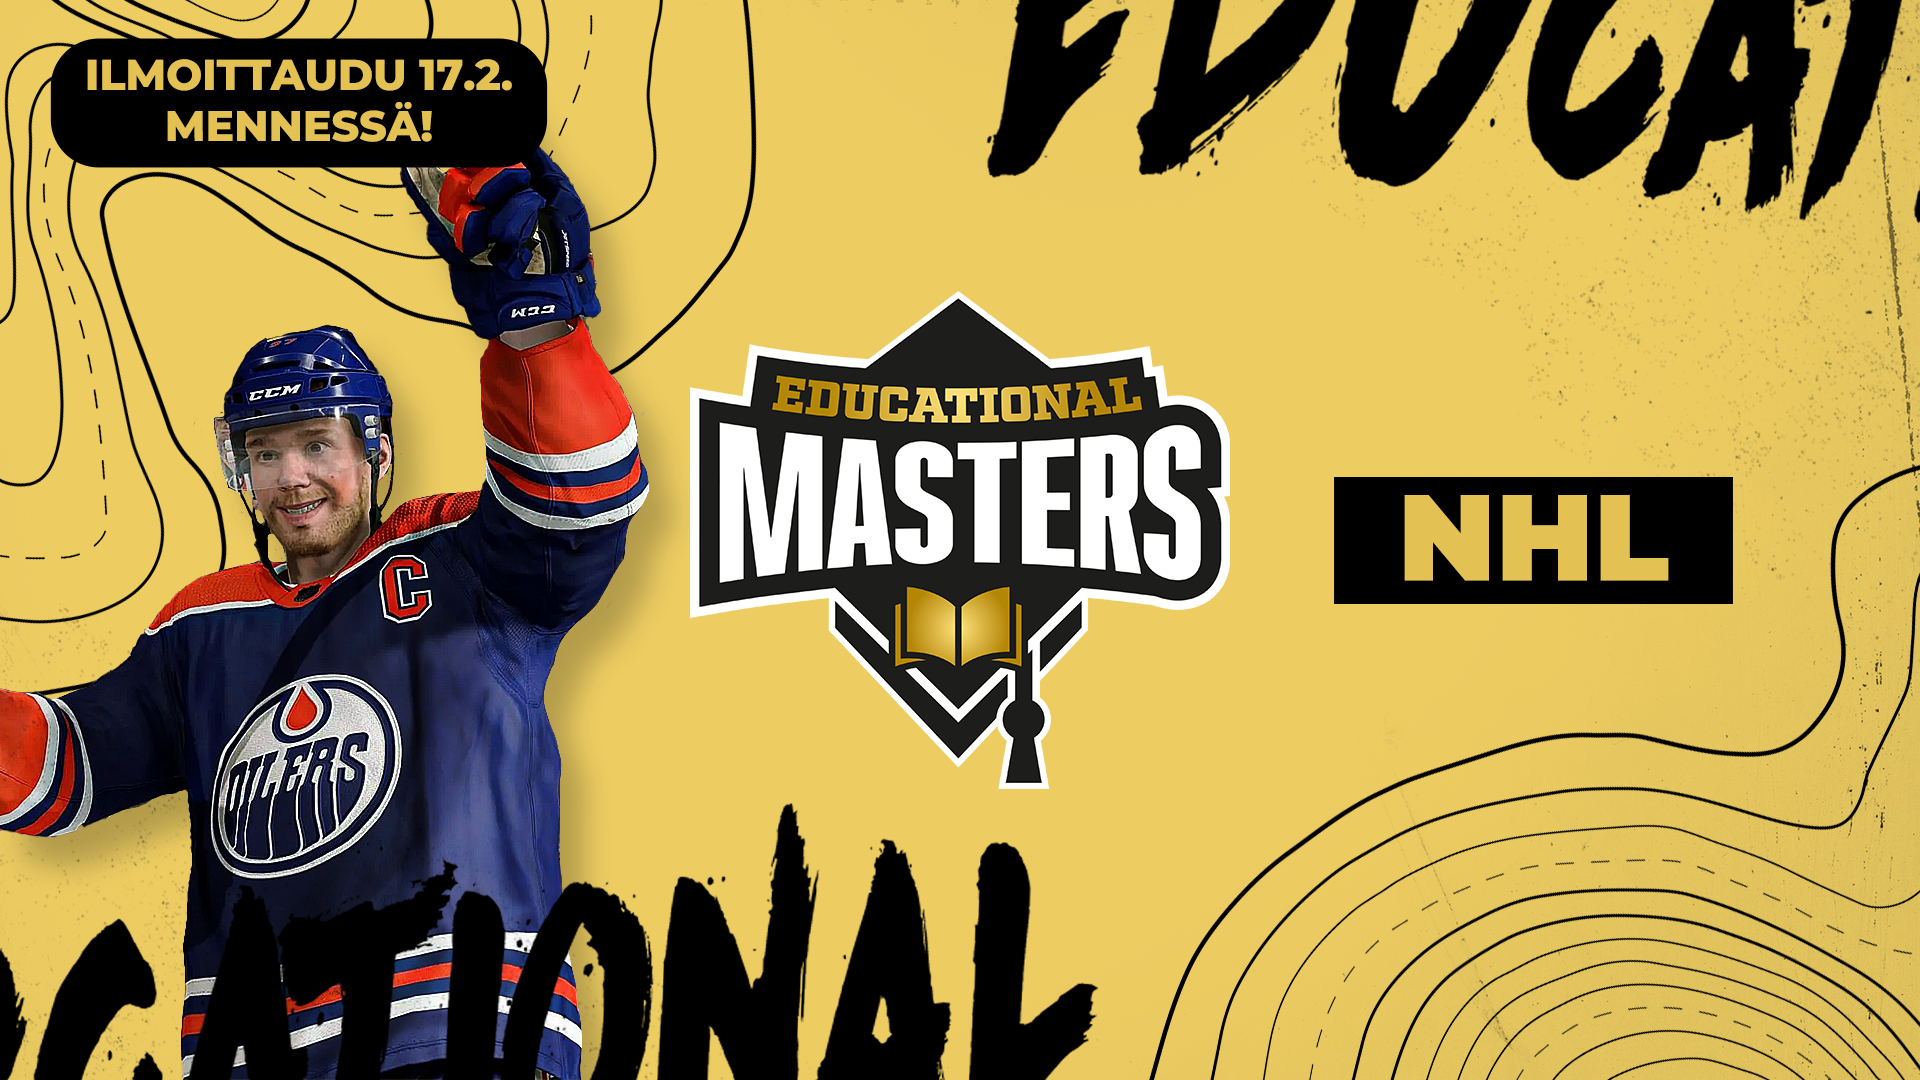 Educational Masters NHL